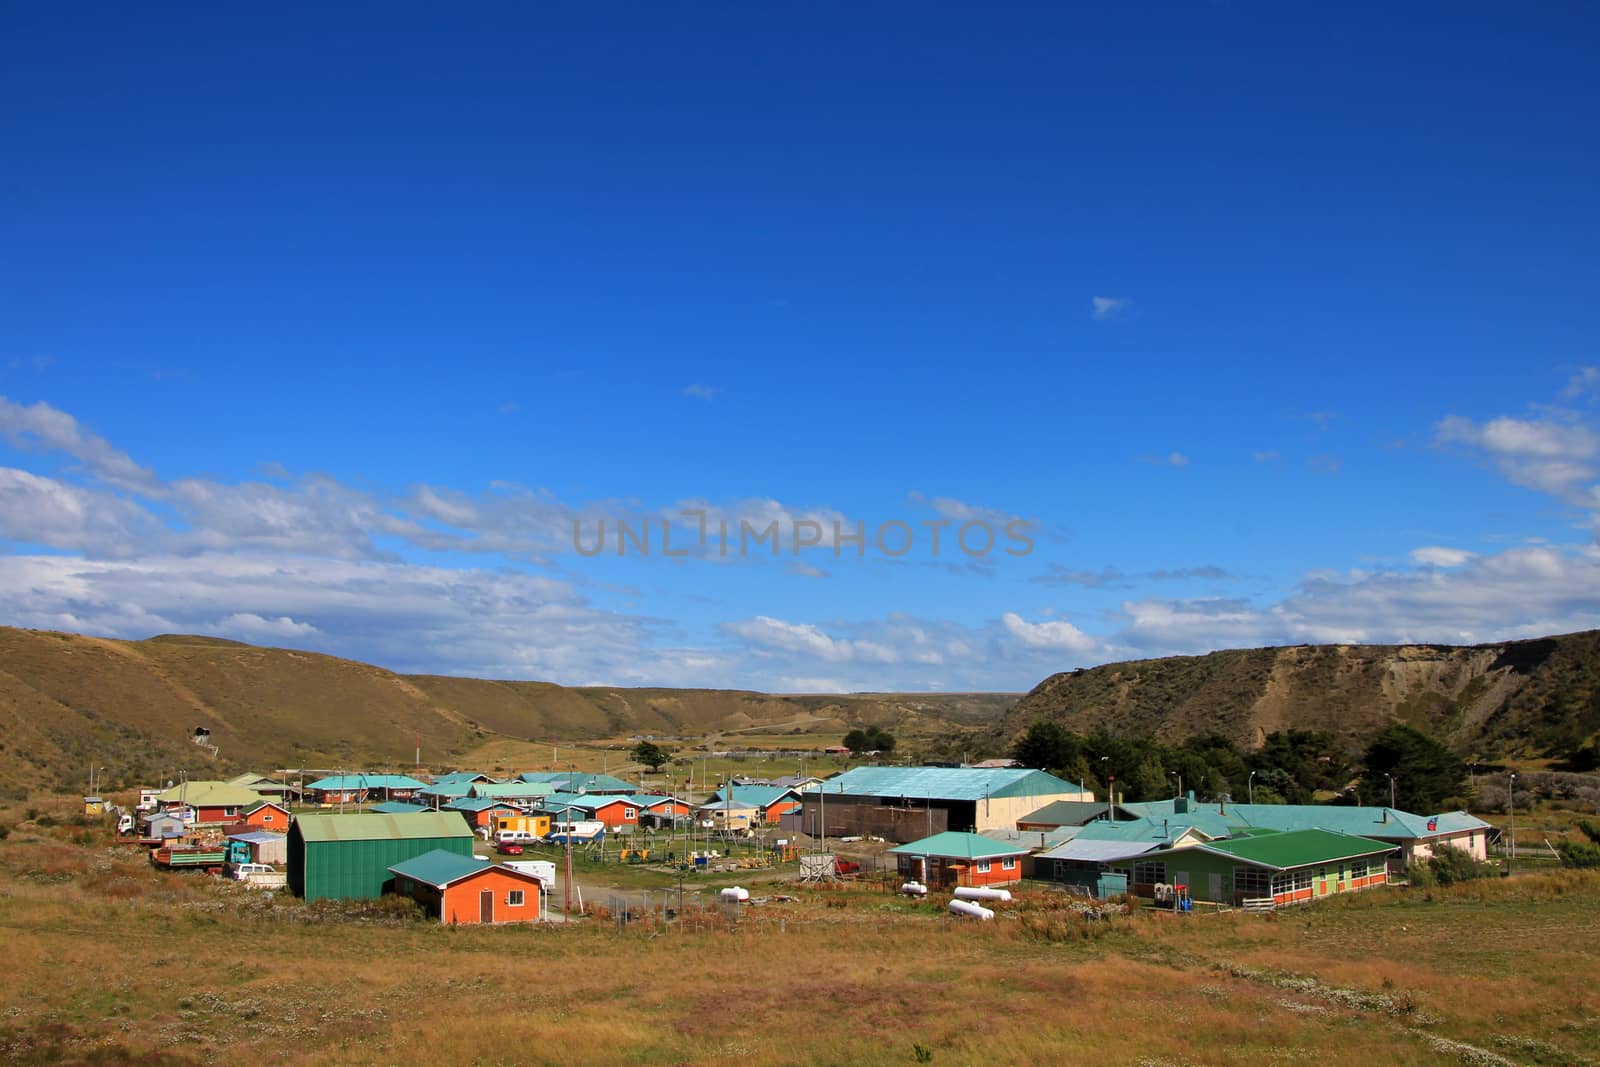 Cameron village centre of the municipality of Temaukel, near Porvenir, Tierra Del Fuego, Patagonia, Chile